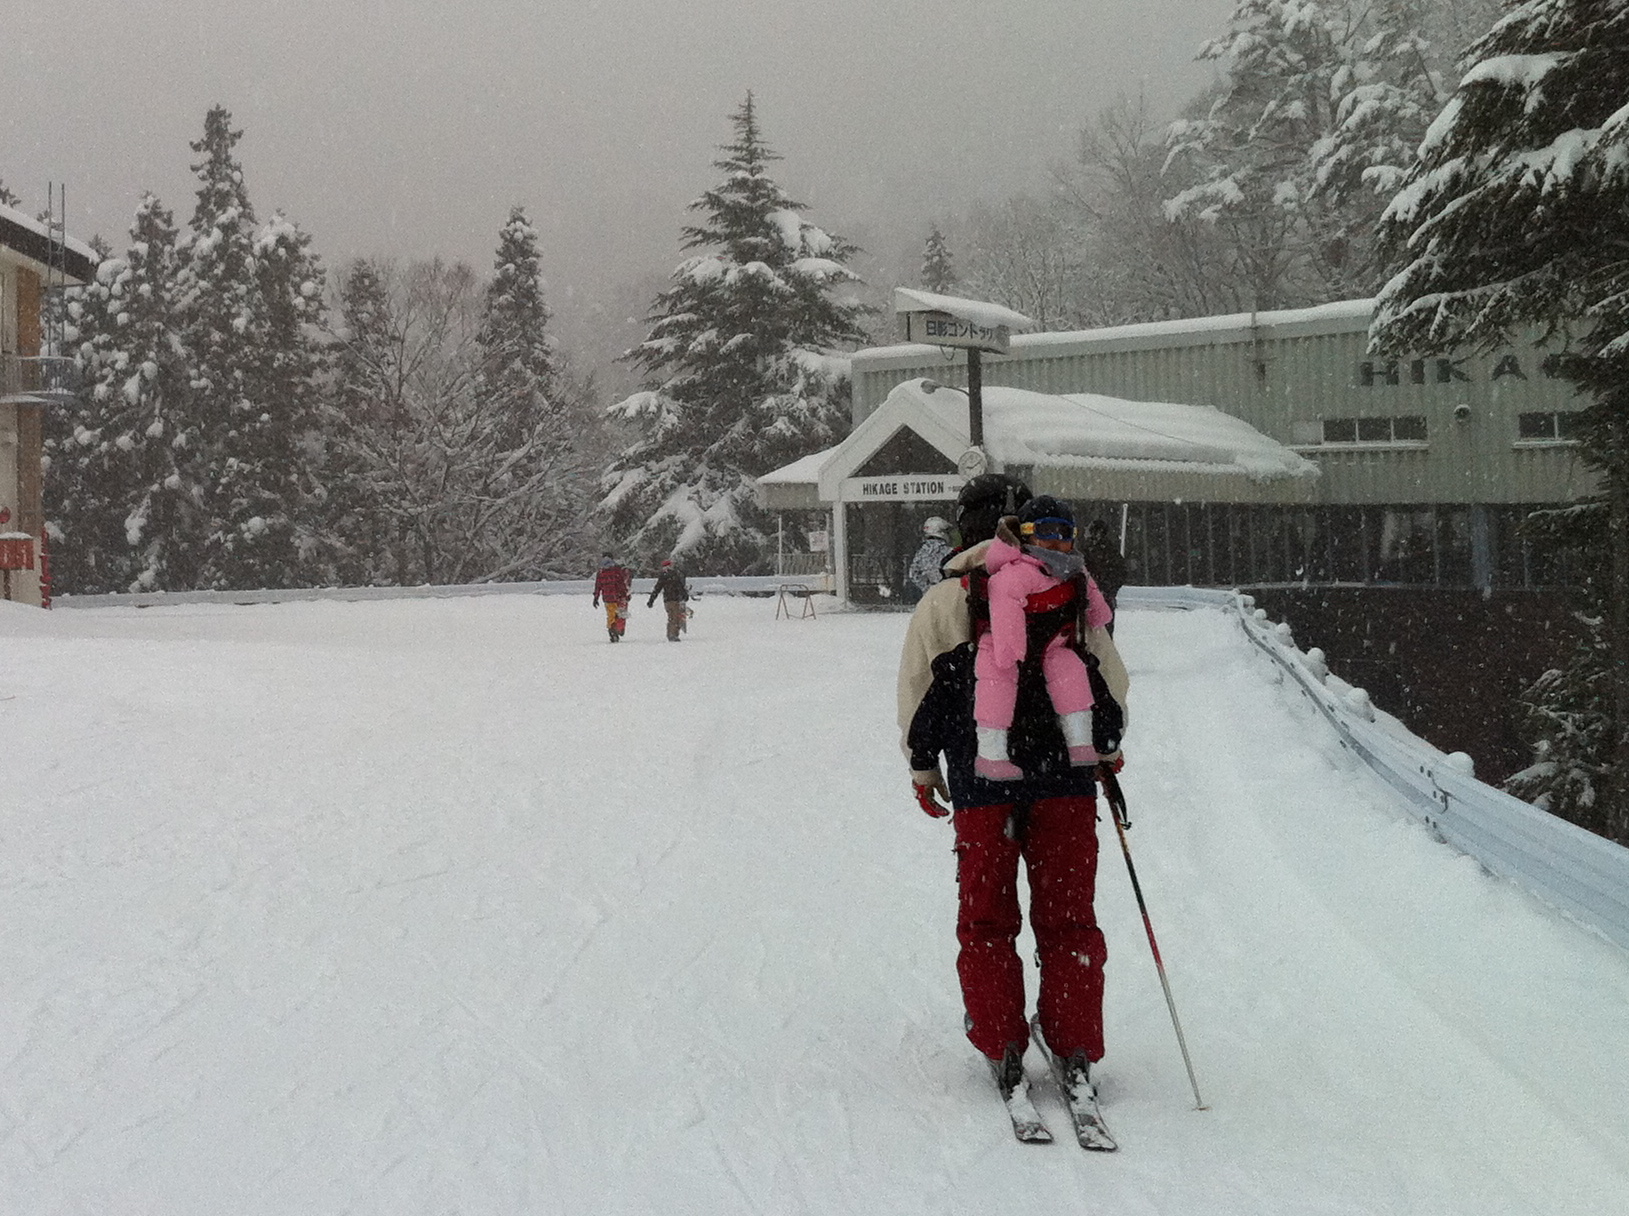 skier carrying kid in pink snowsuit